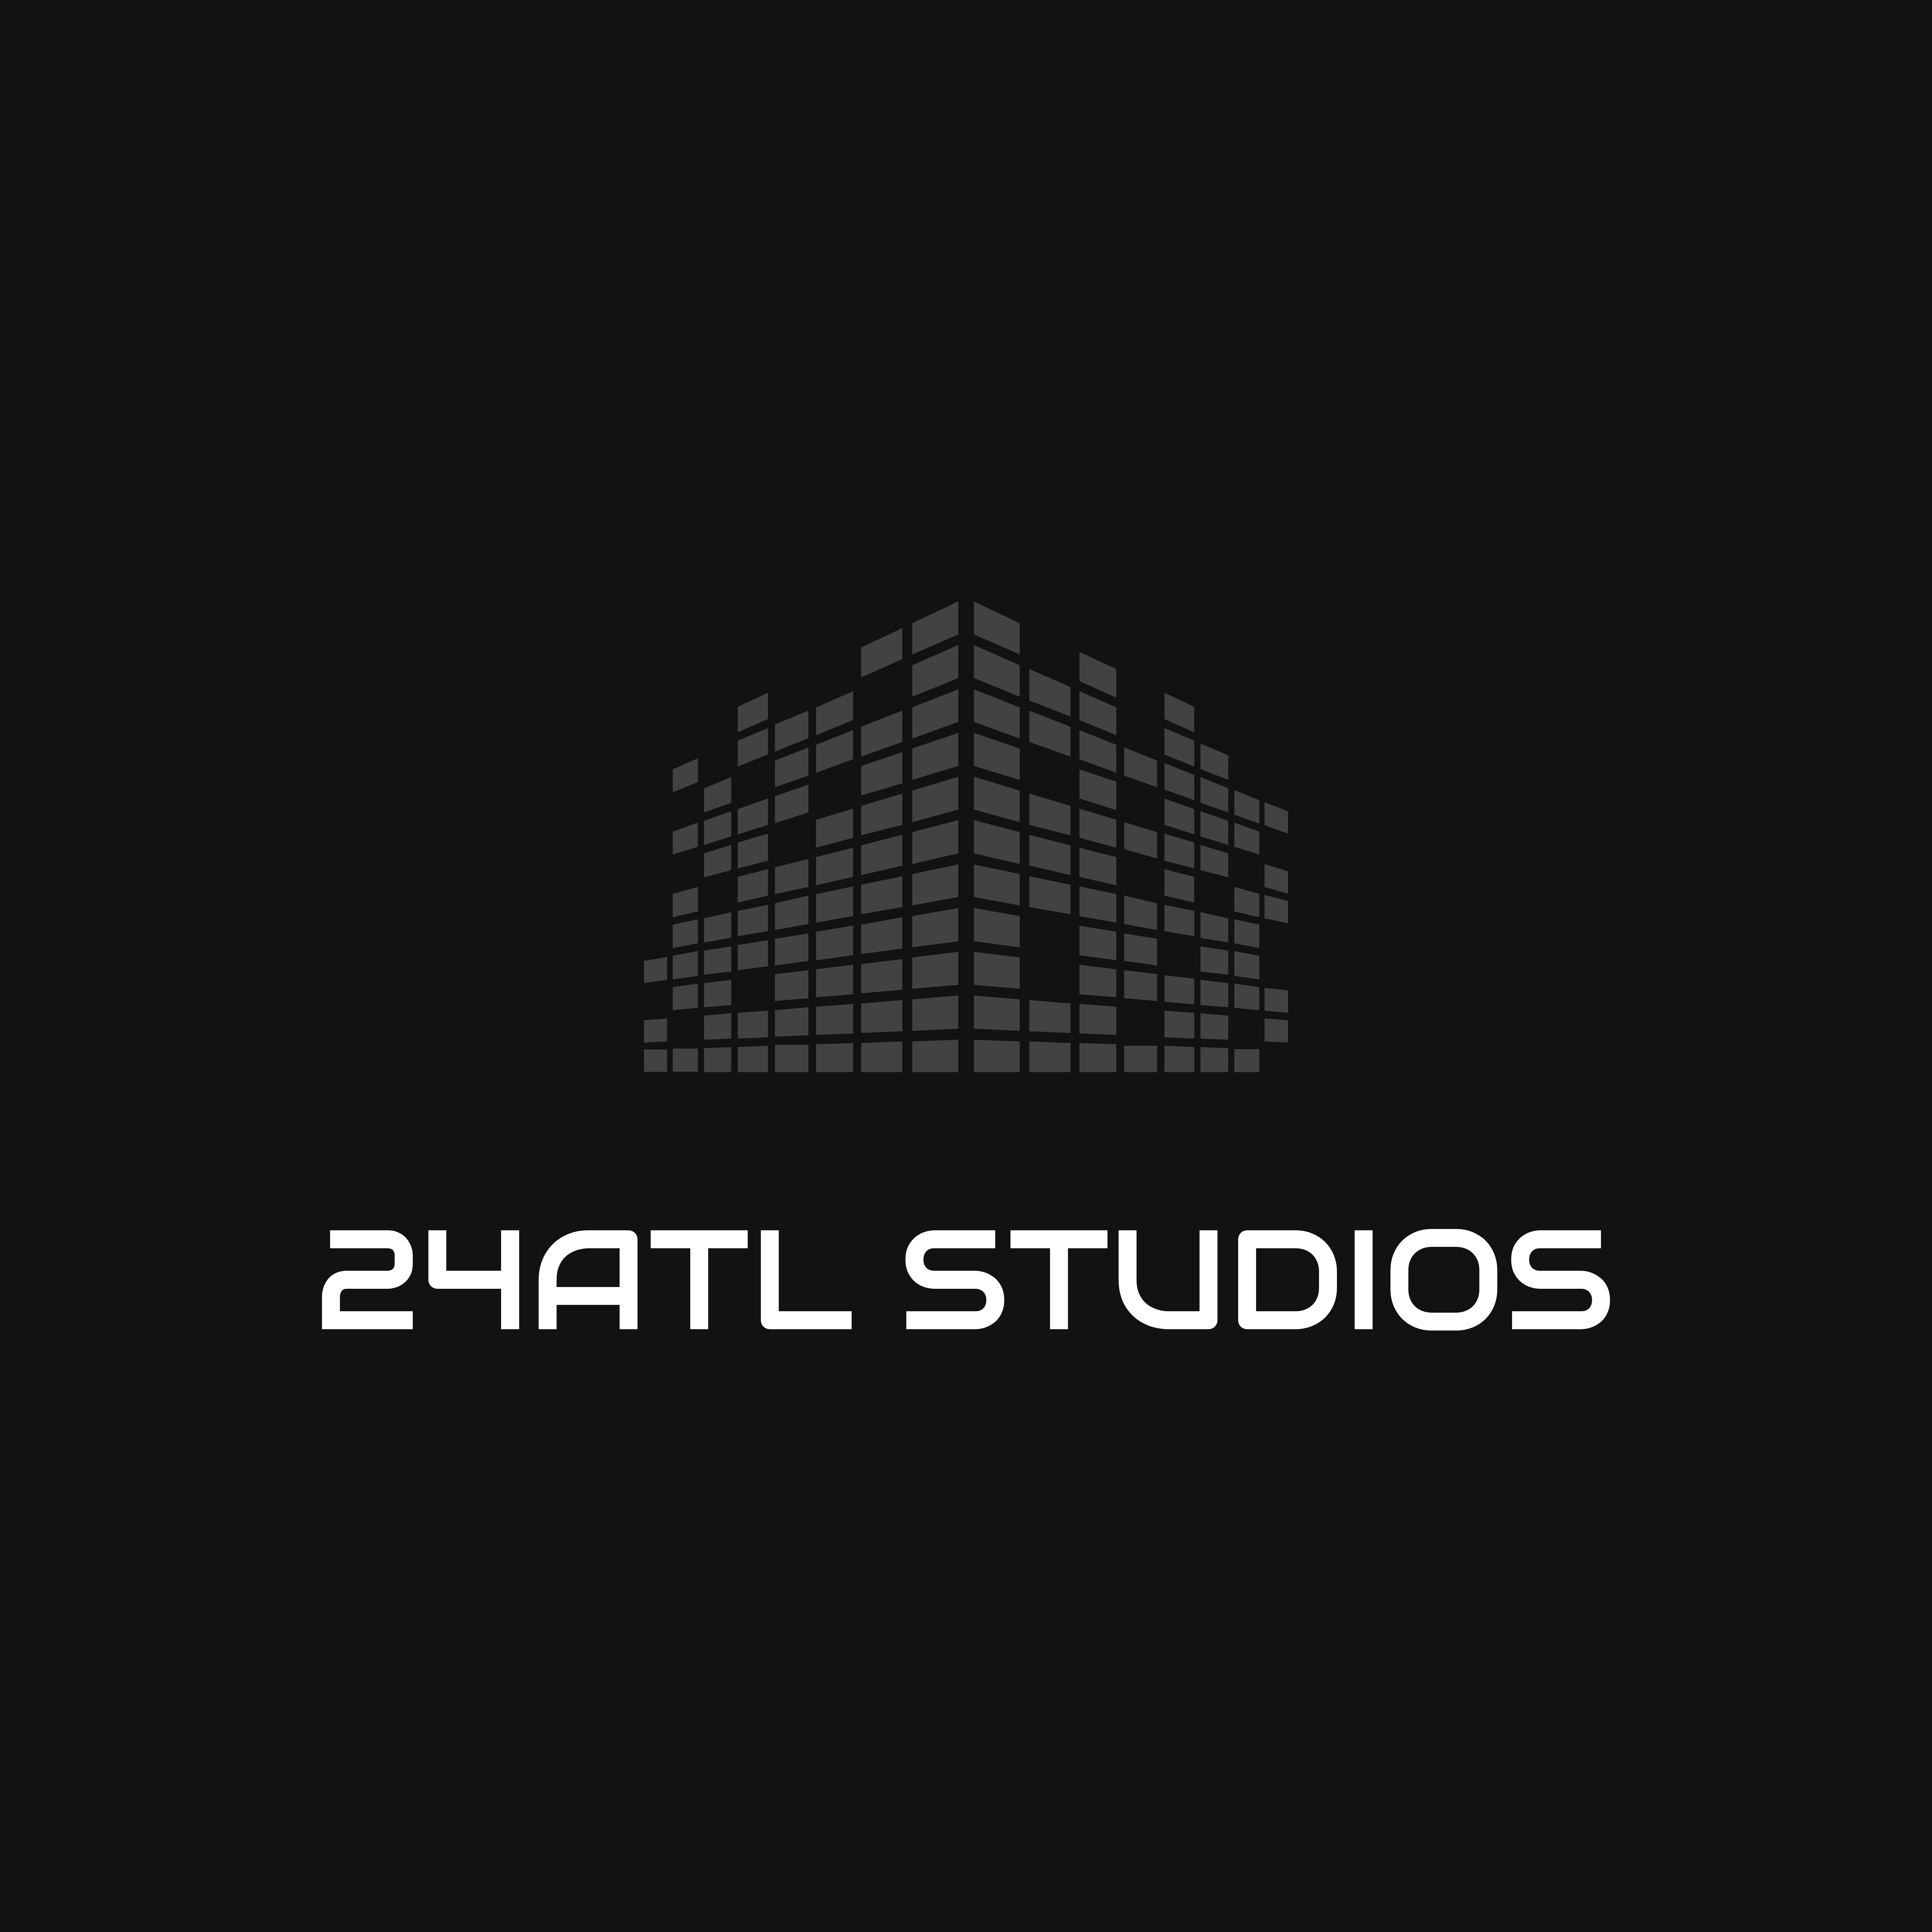 24 ATL Studios